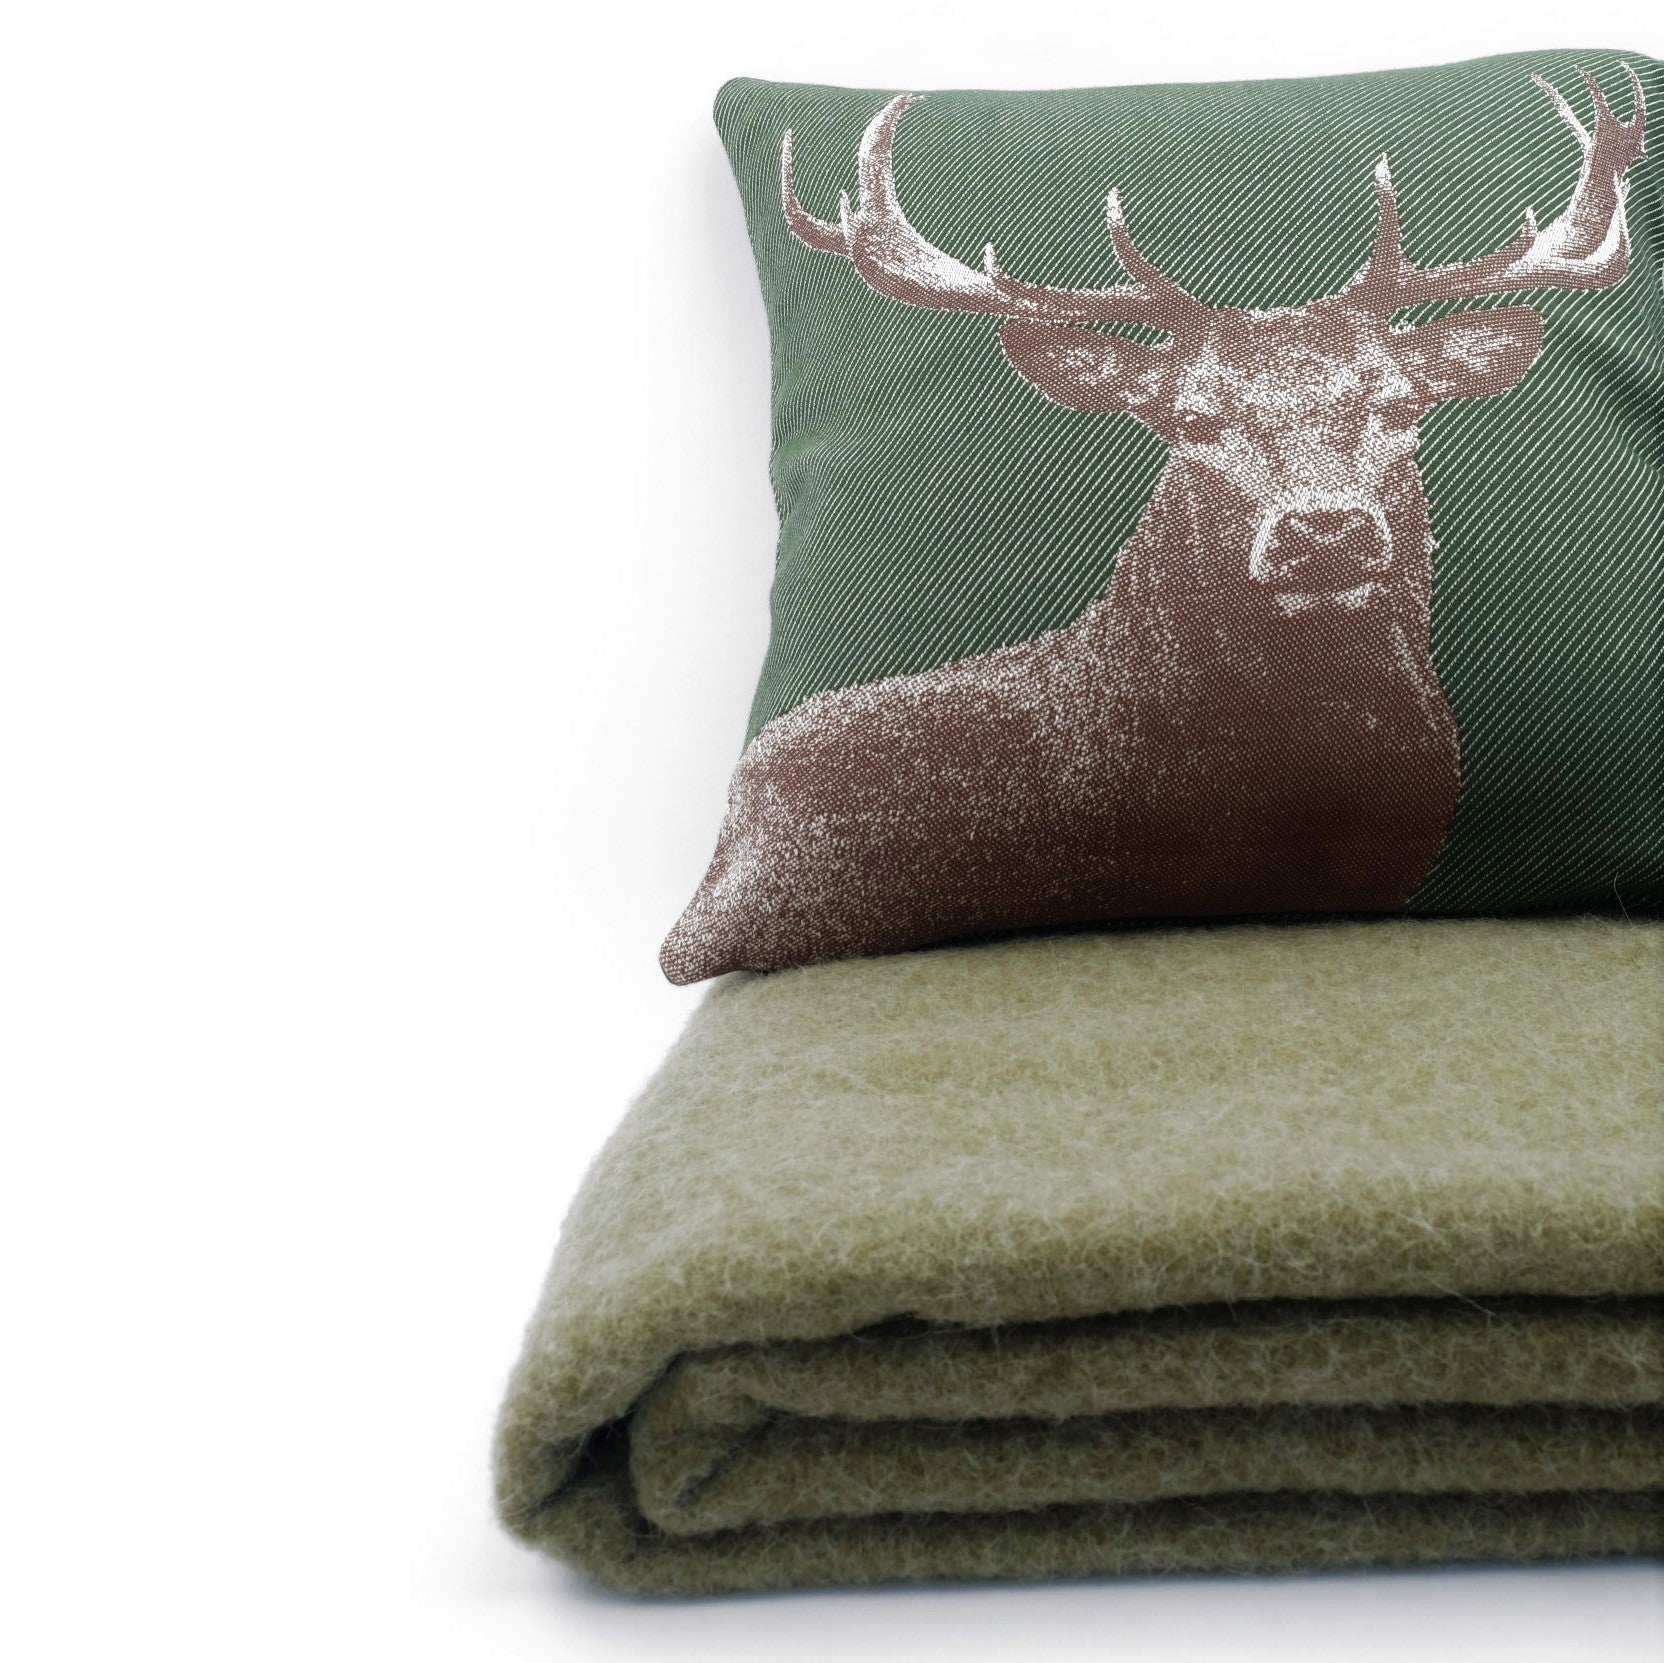 Testa cervo federa cuscino in 100% cotone, 40 x 40 cm, colore verde